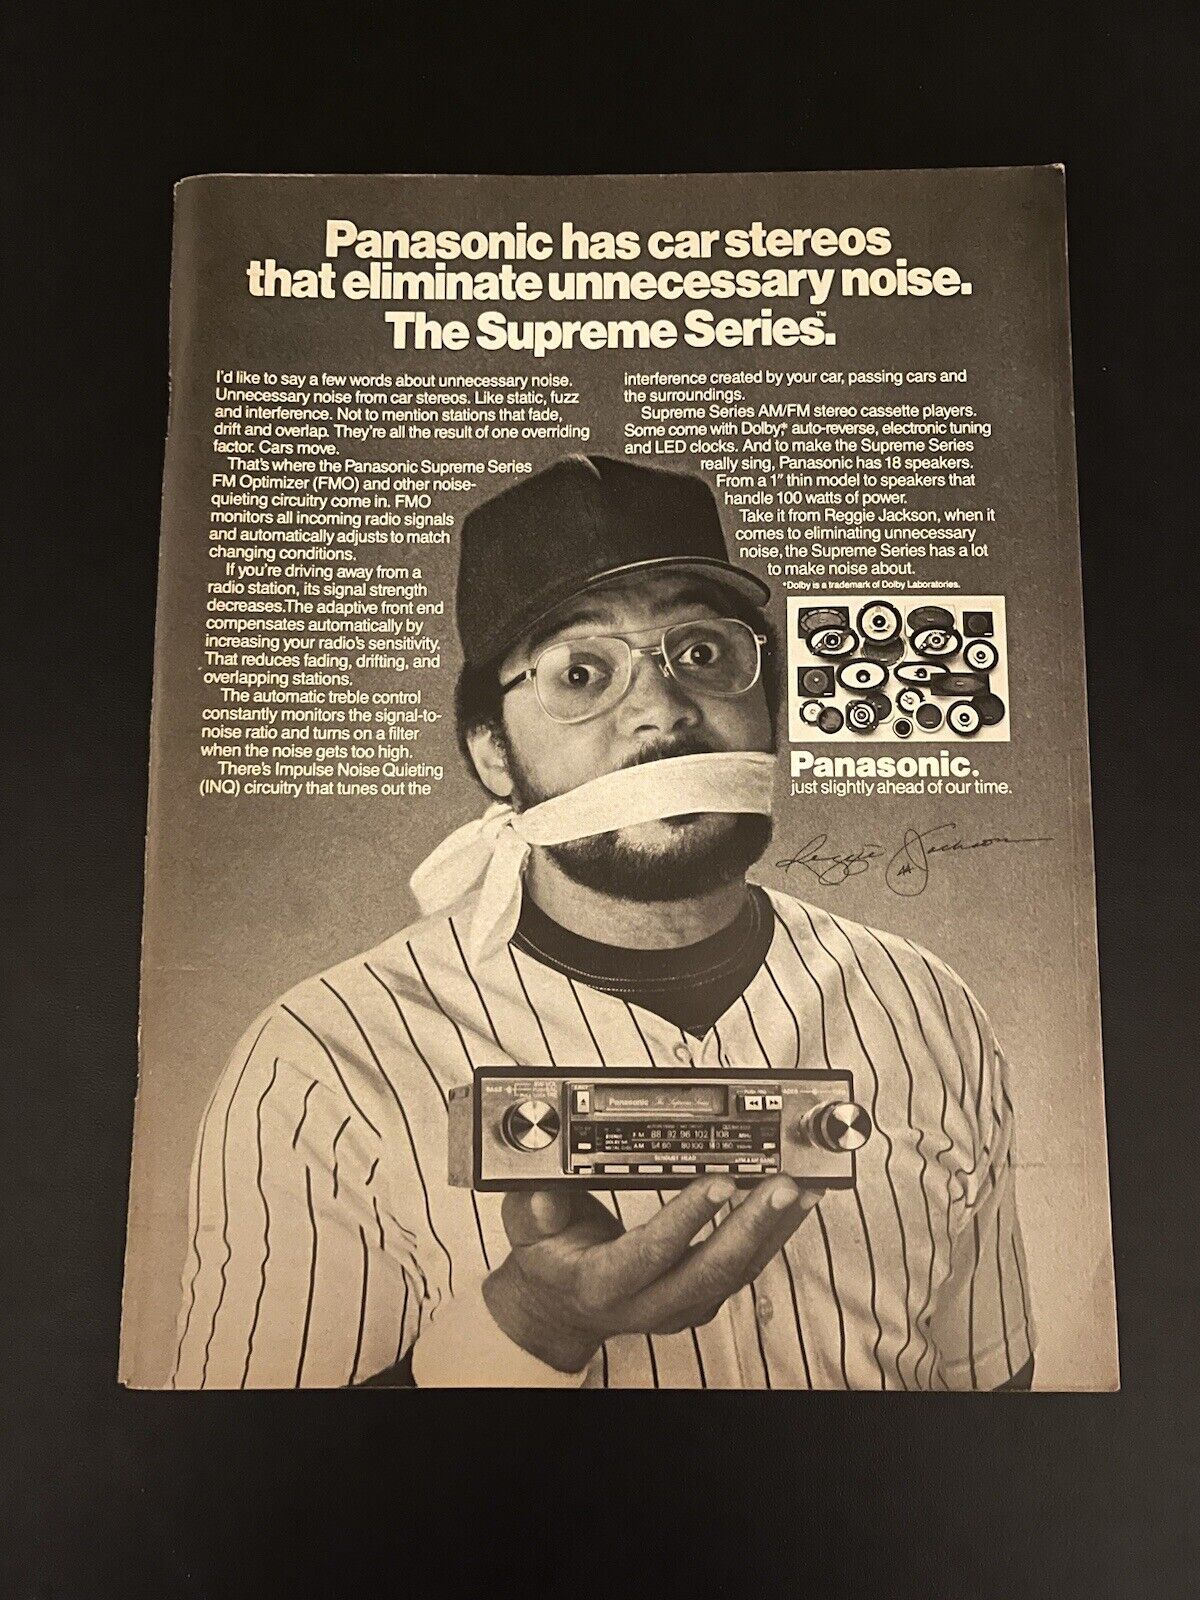 1981 Panasonic Supreme Series Car Stereo Reggie Jackson Print Ad Original NYC NY